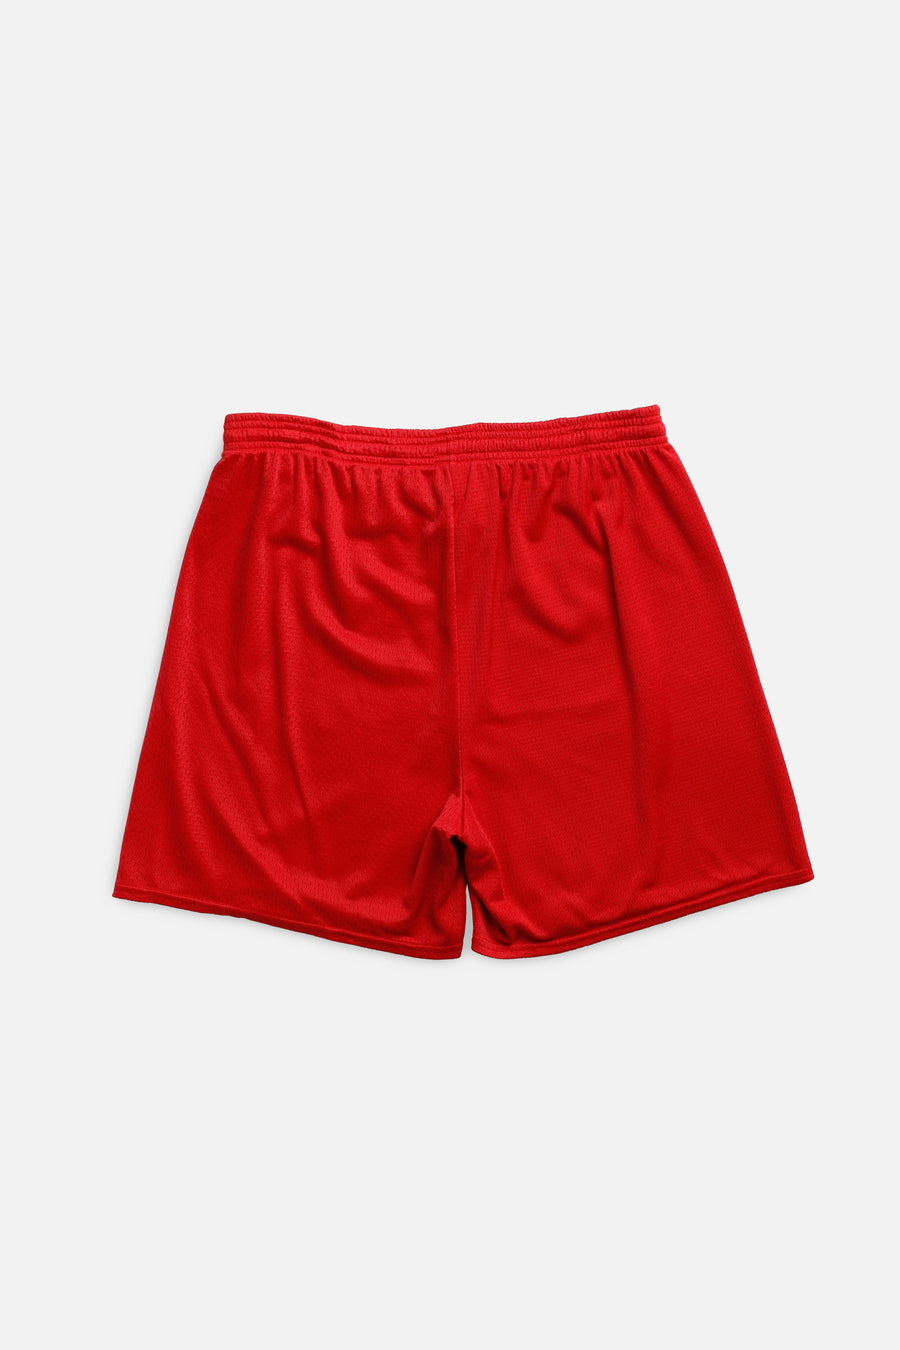 Vintage Olympics USA Shorts - L